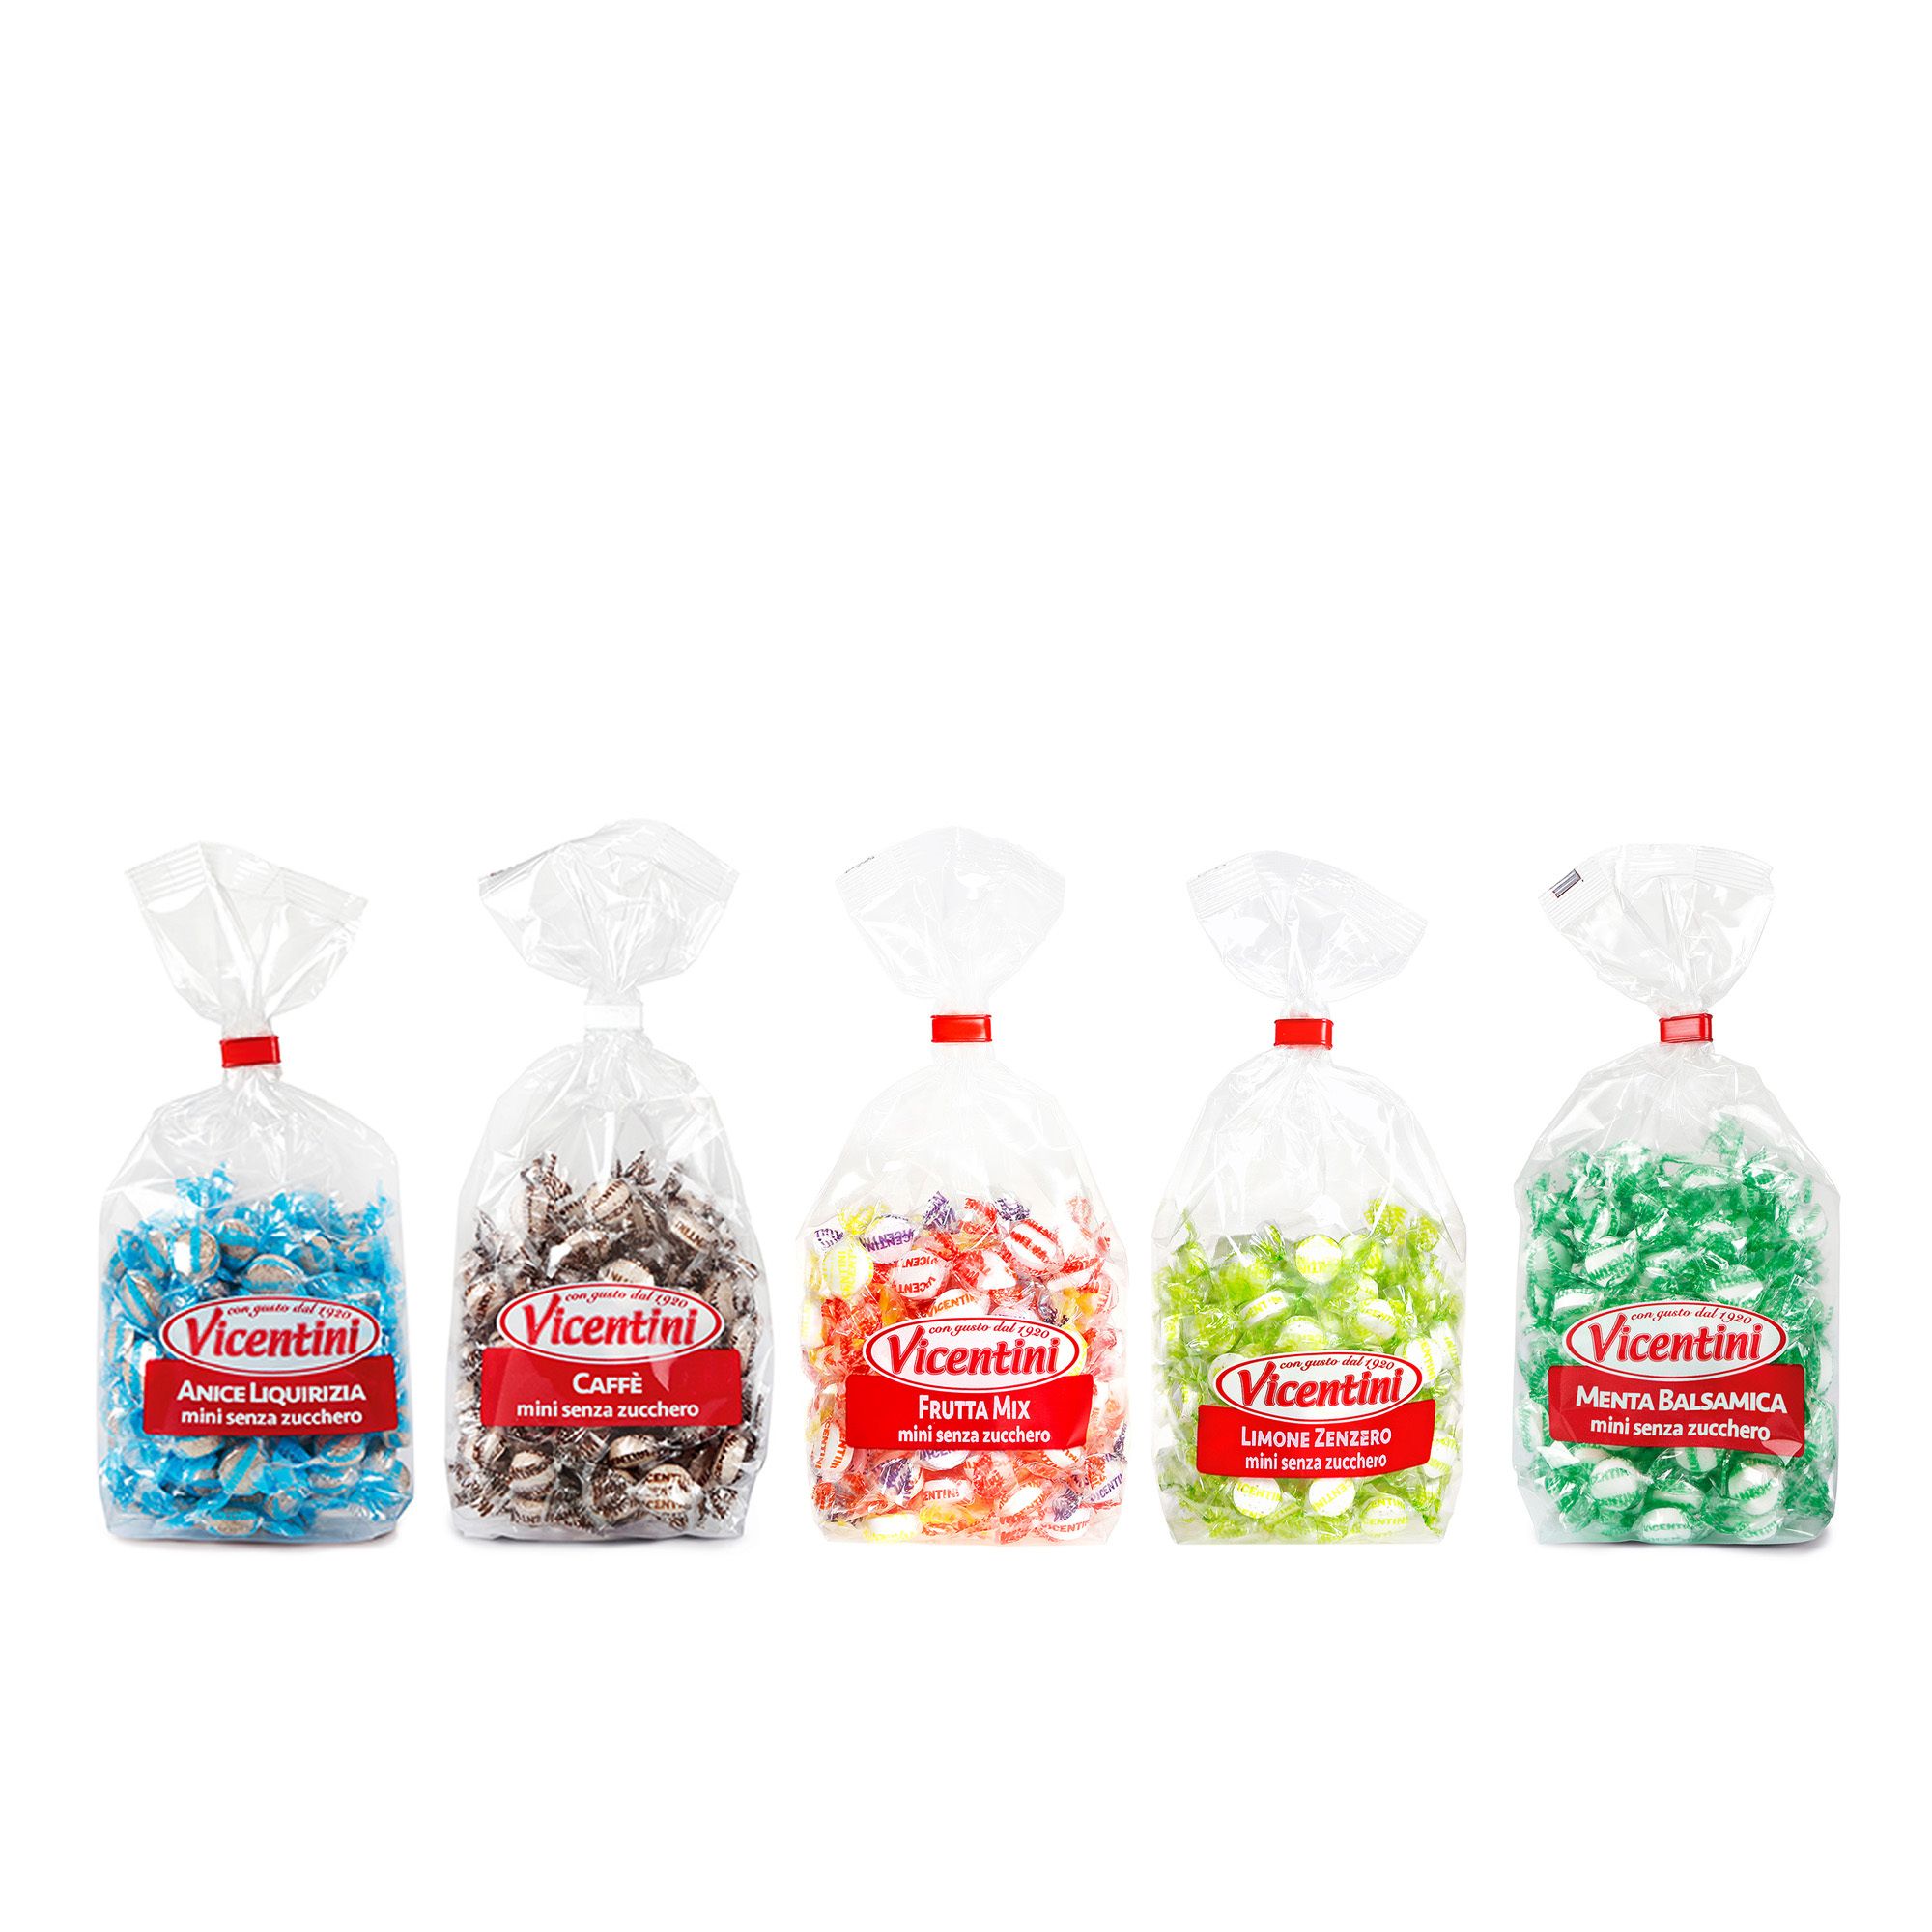 Image of 5 sacchetti di caramelle senza zucchero